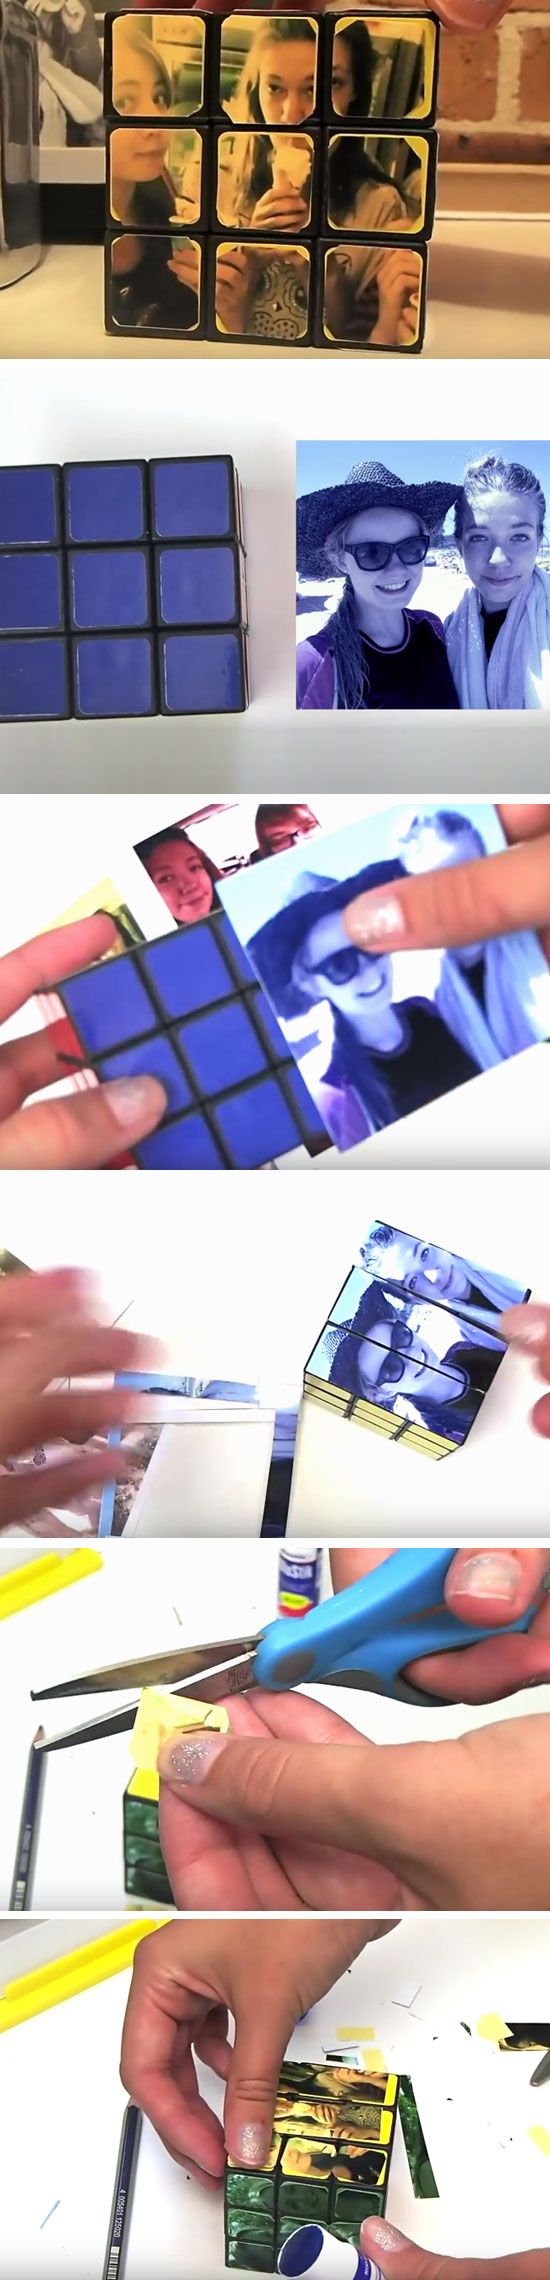 Rubiks Cube Photos | DIY Christmas Gifts for Family